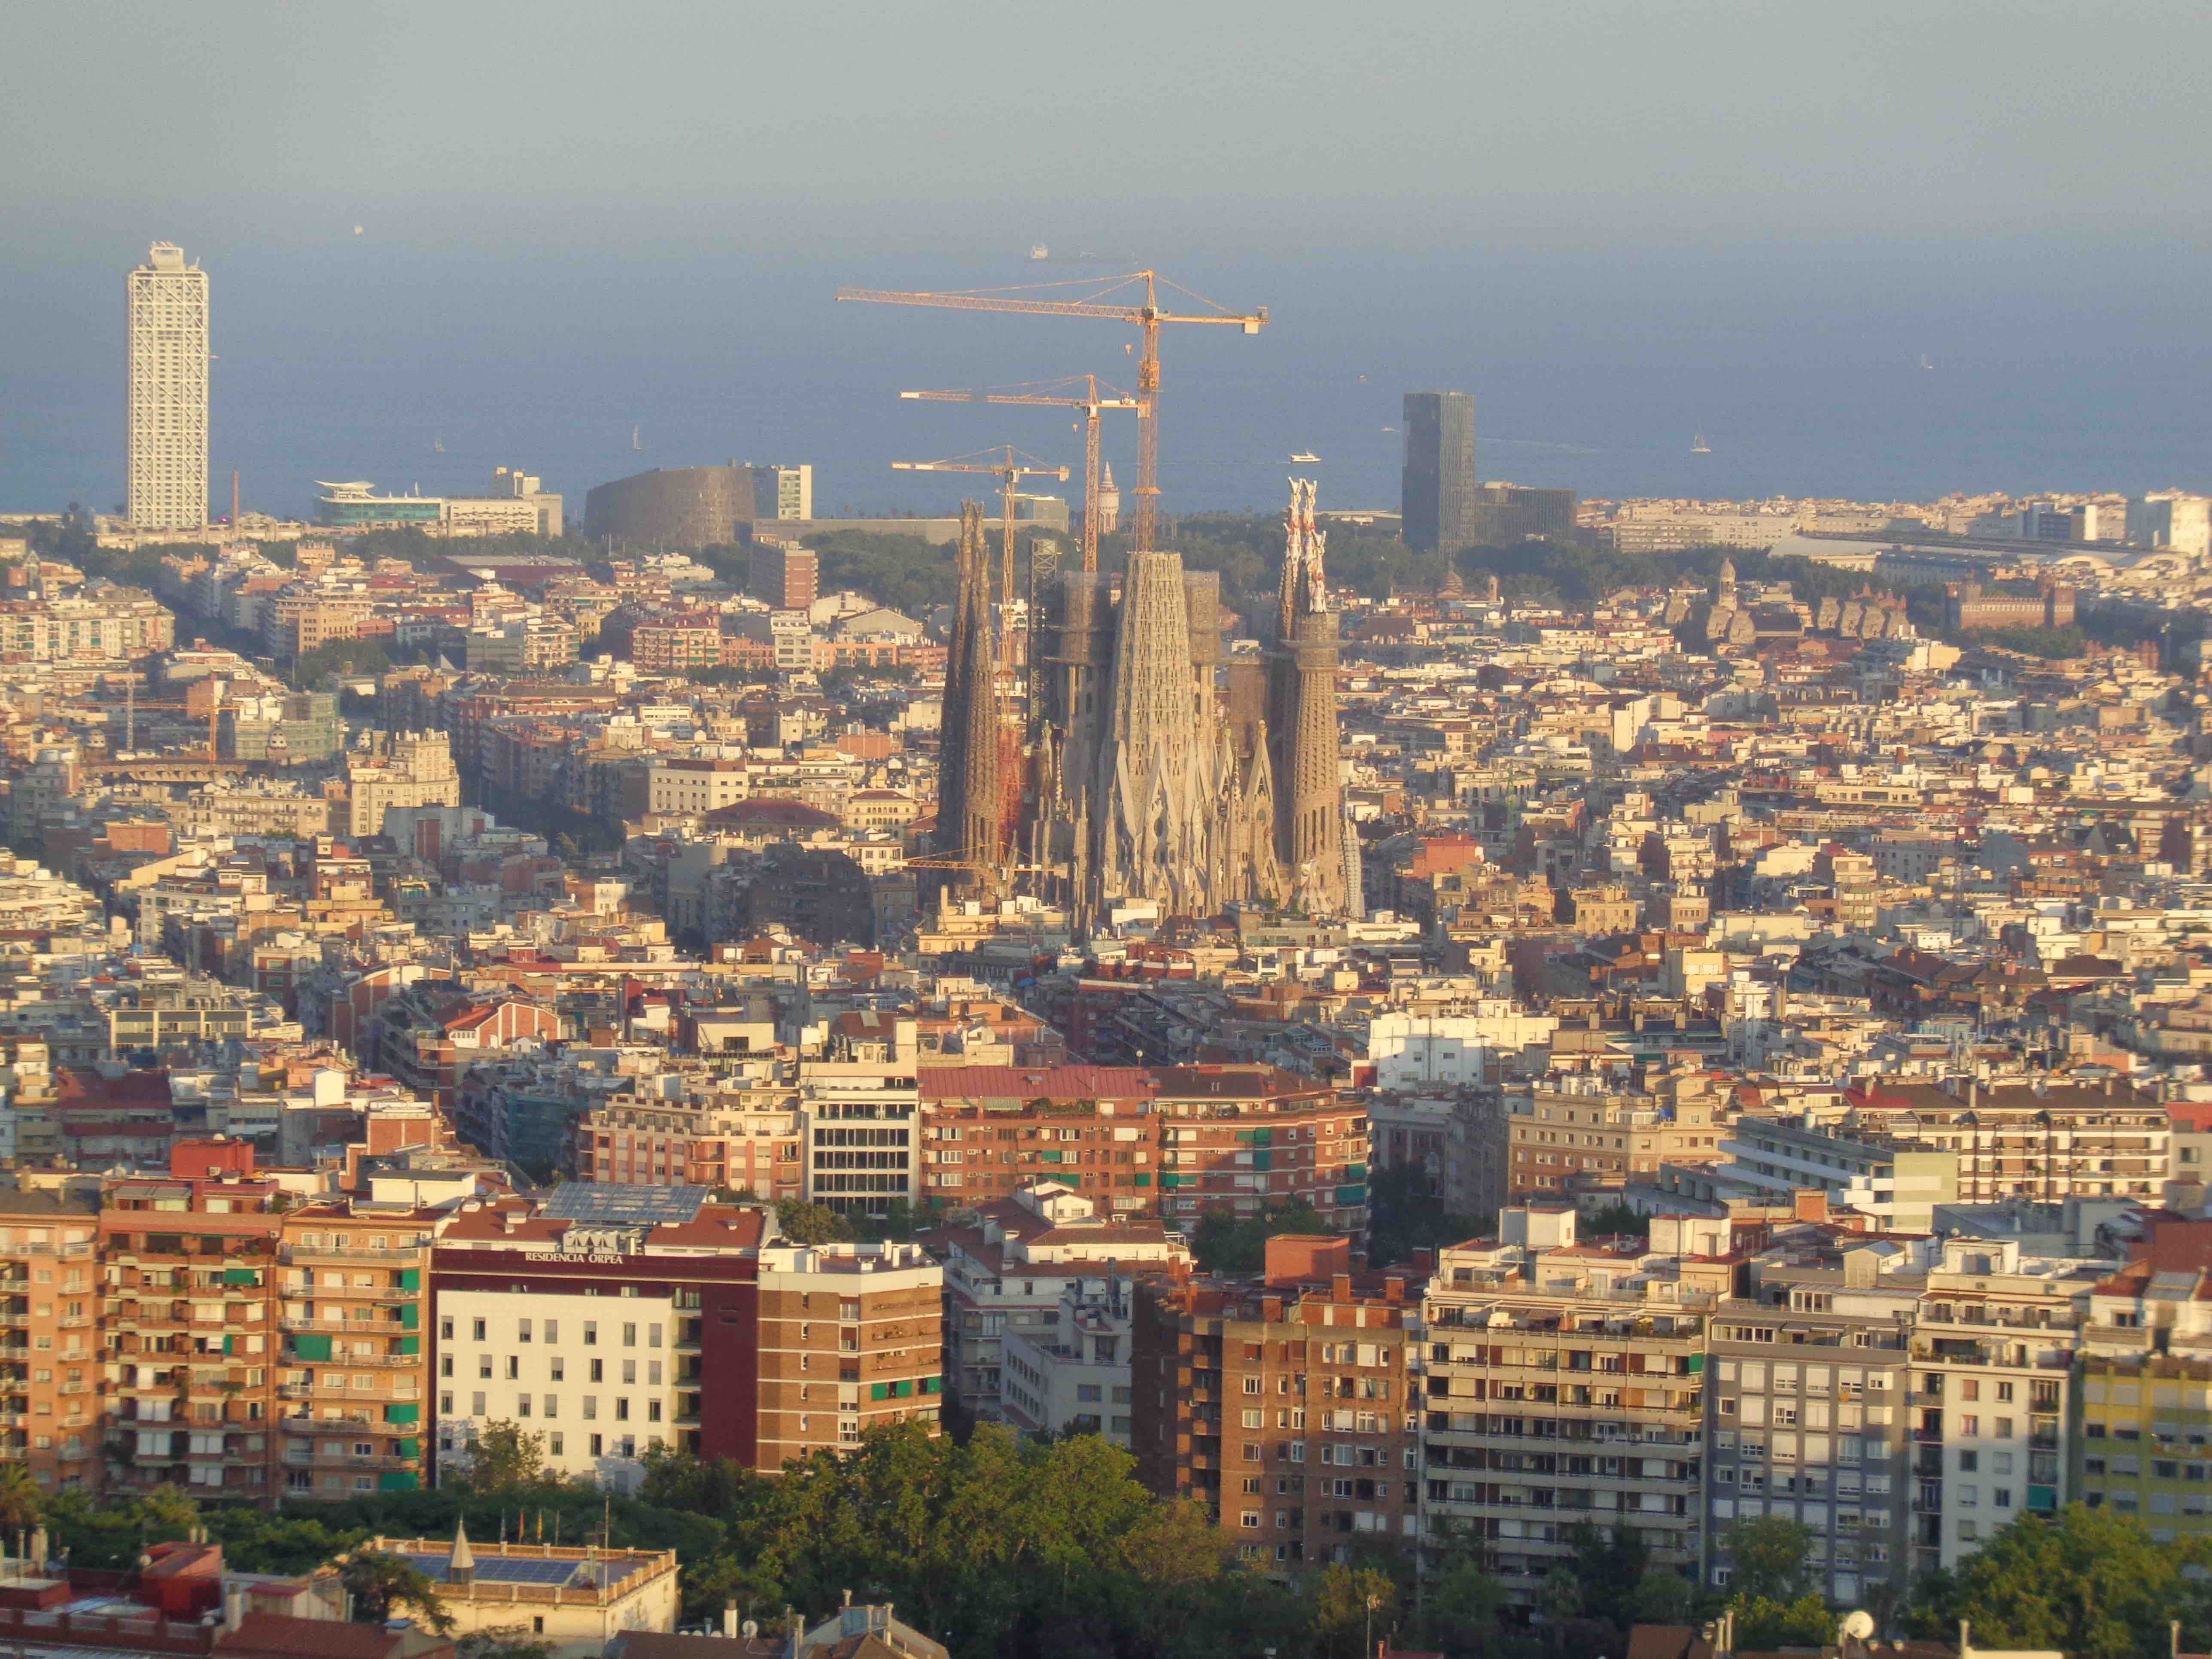 Summer in Barcelona - Business & Creative Industries